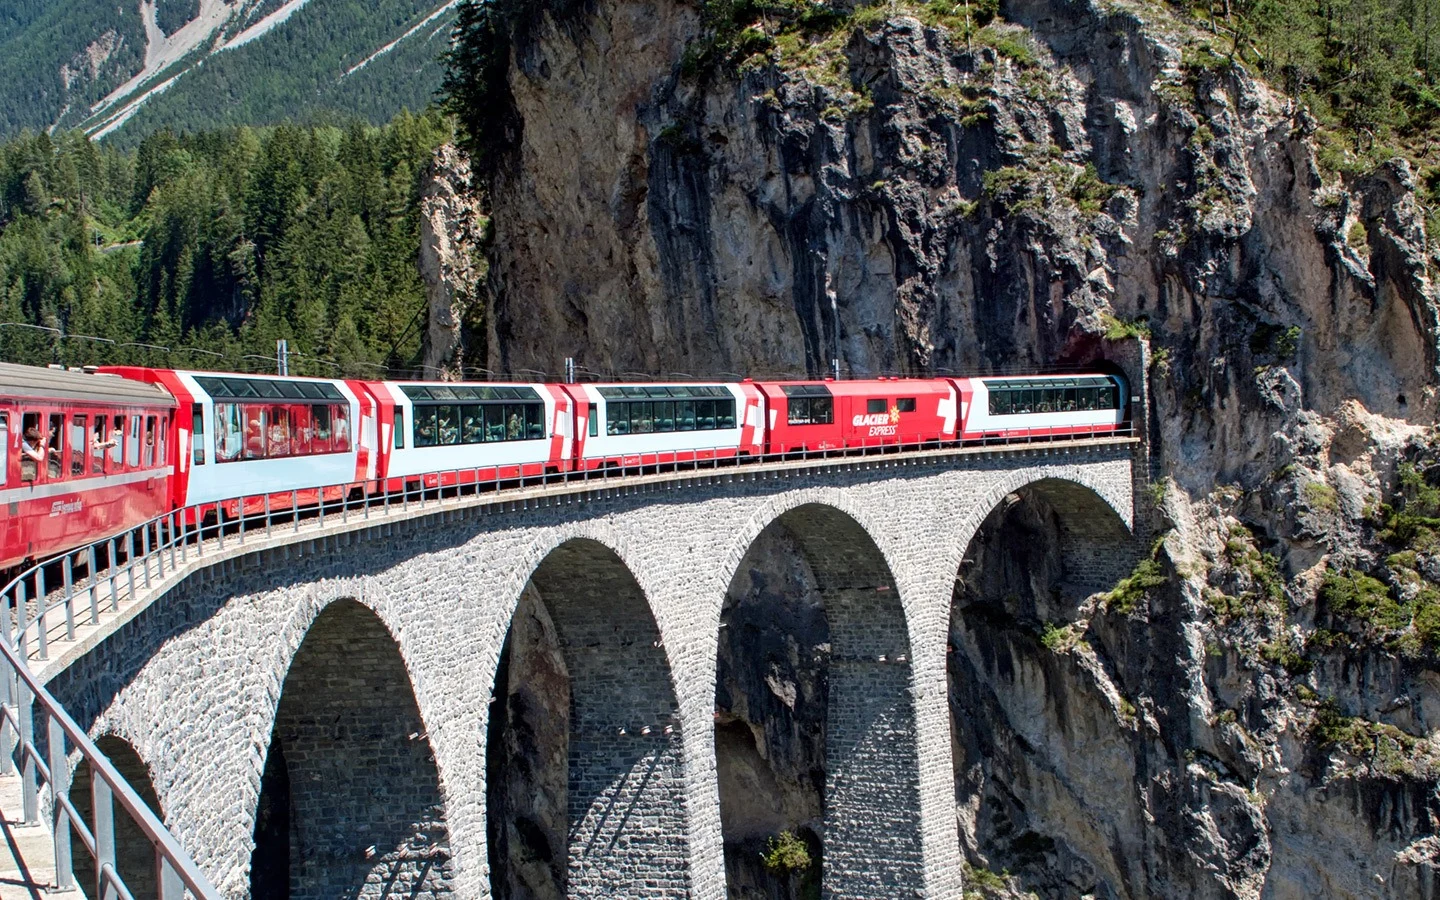 The Glacier Express in Switzerland